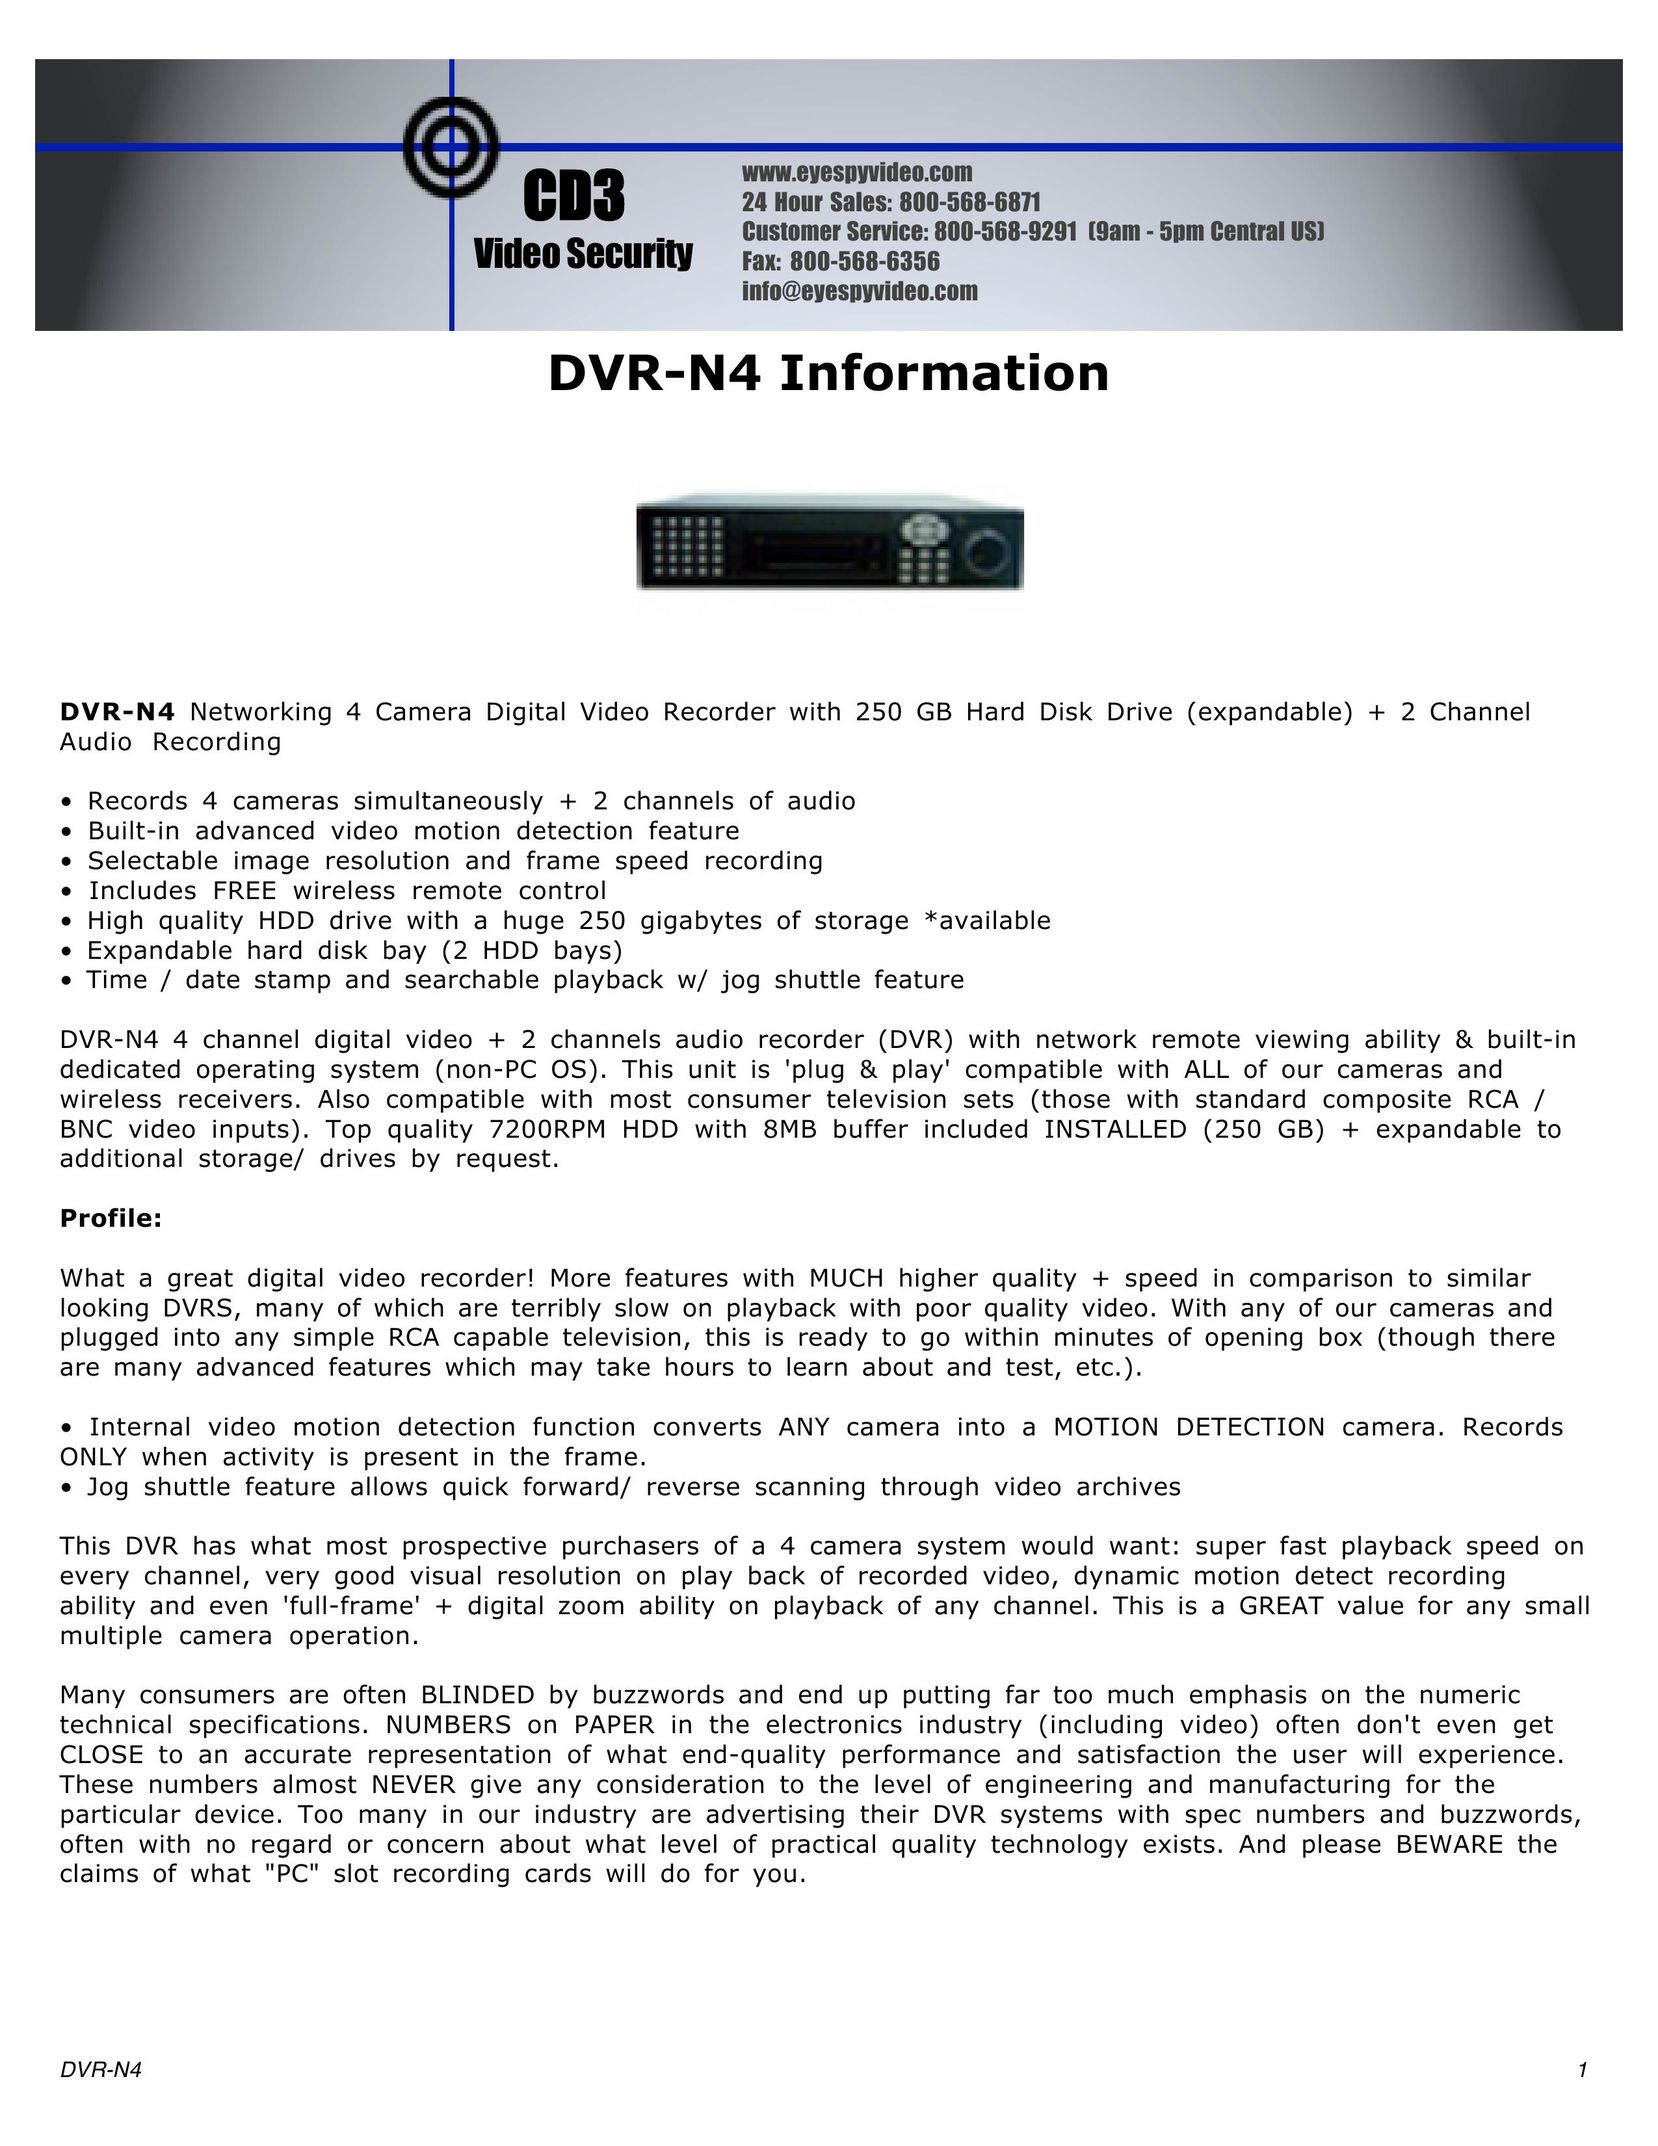 Brother DVR-N4 DVR User Manual